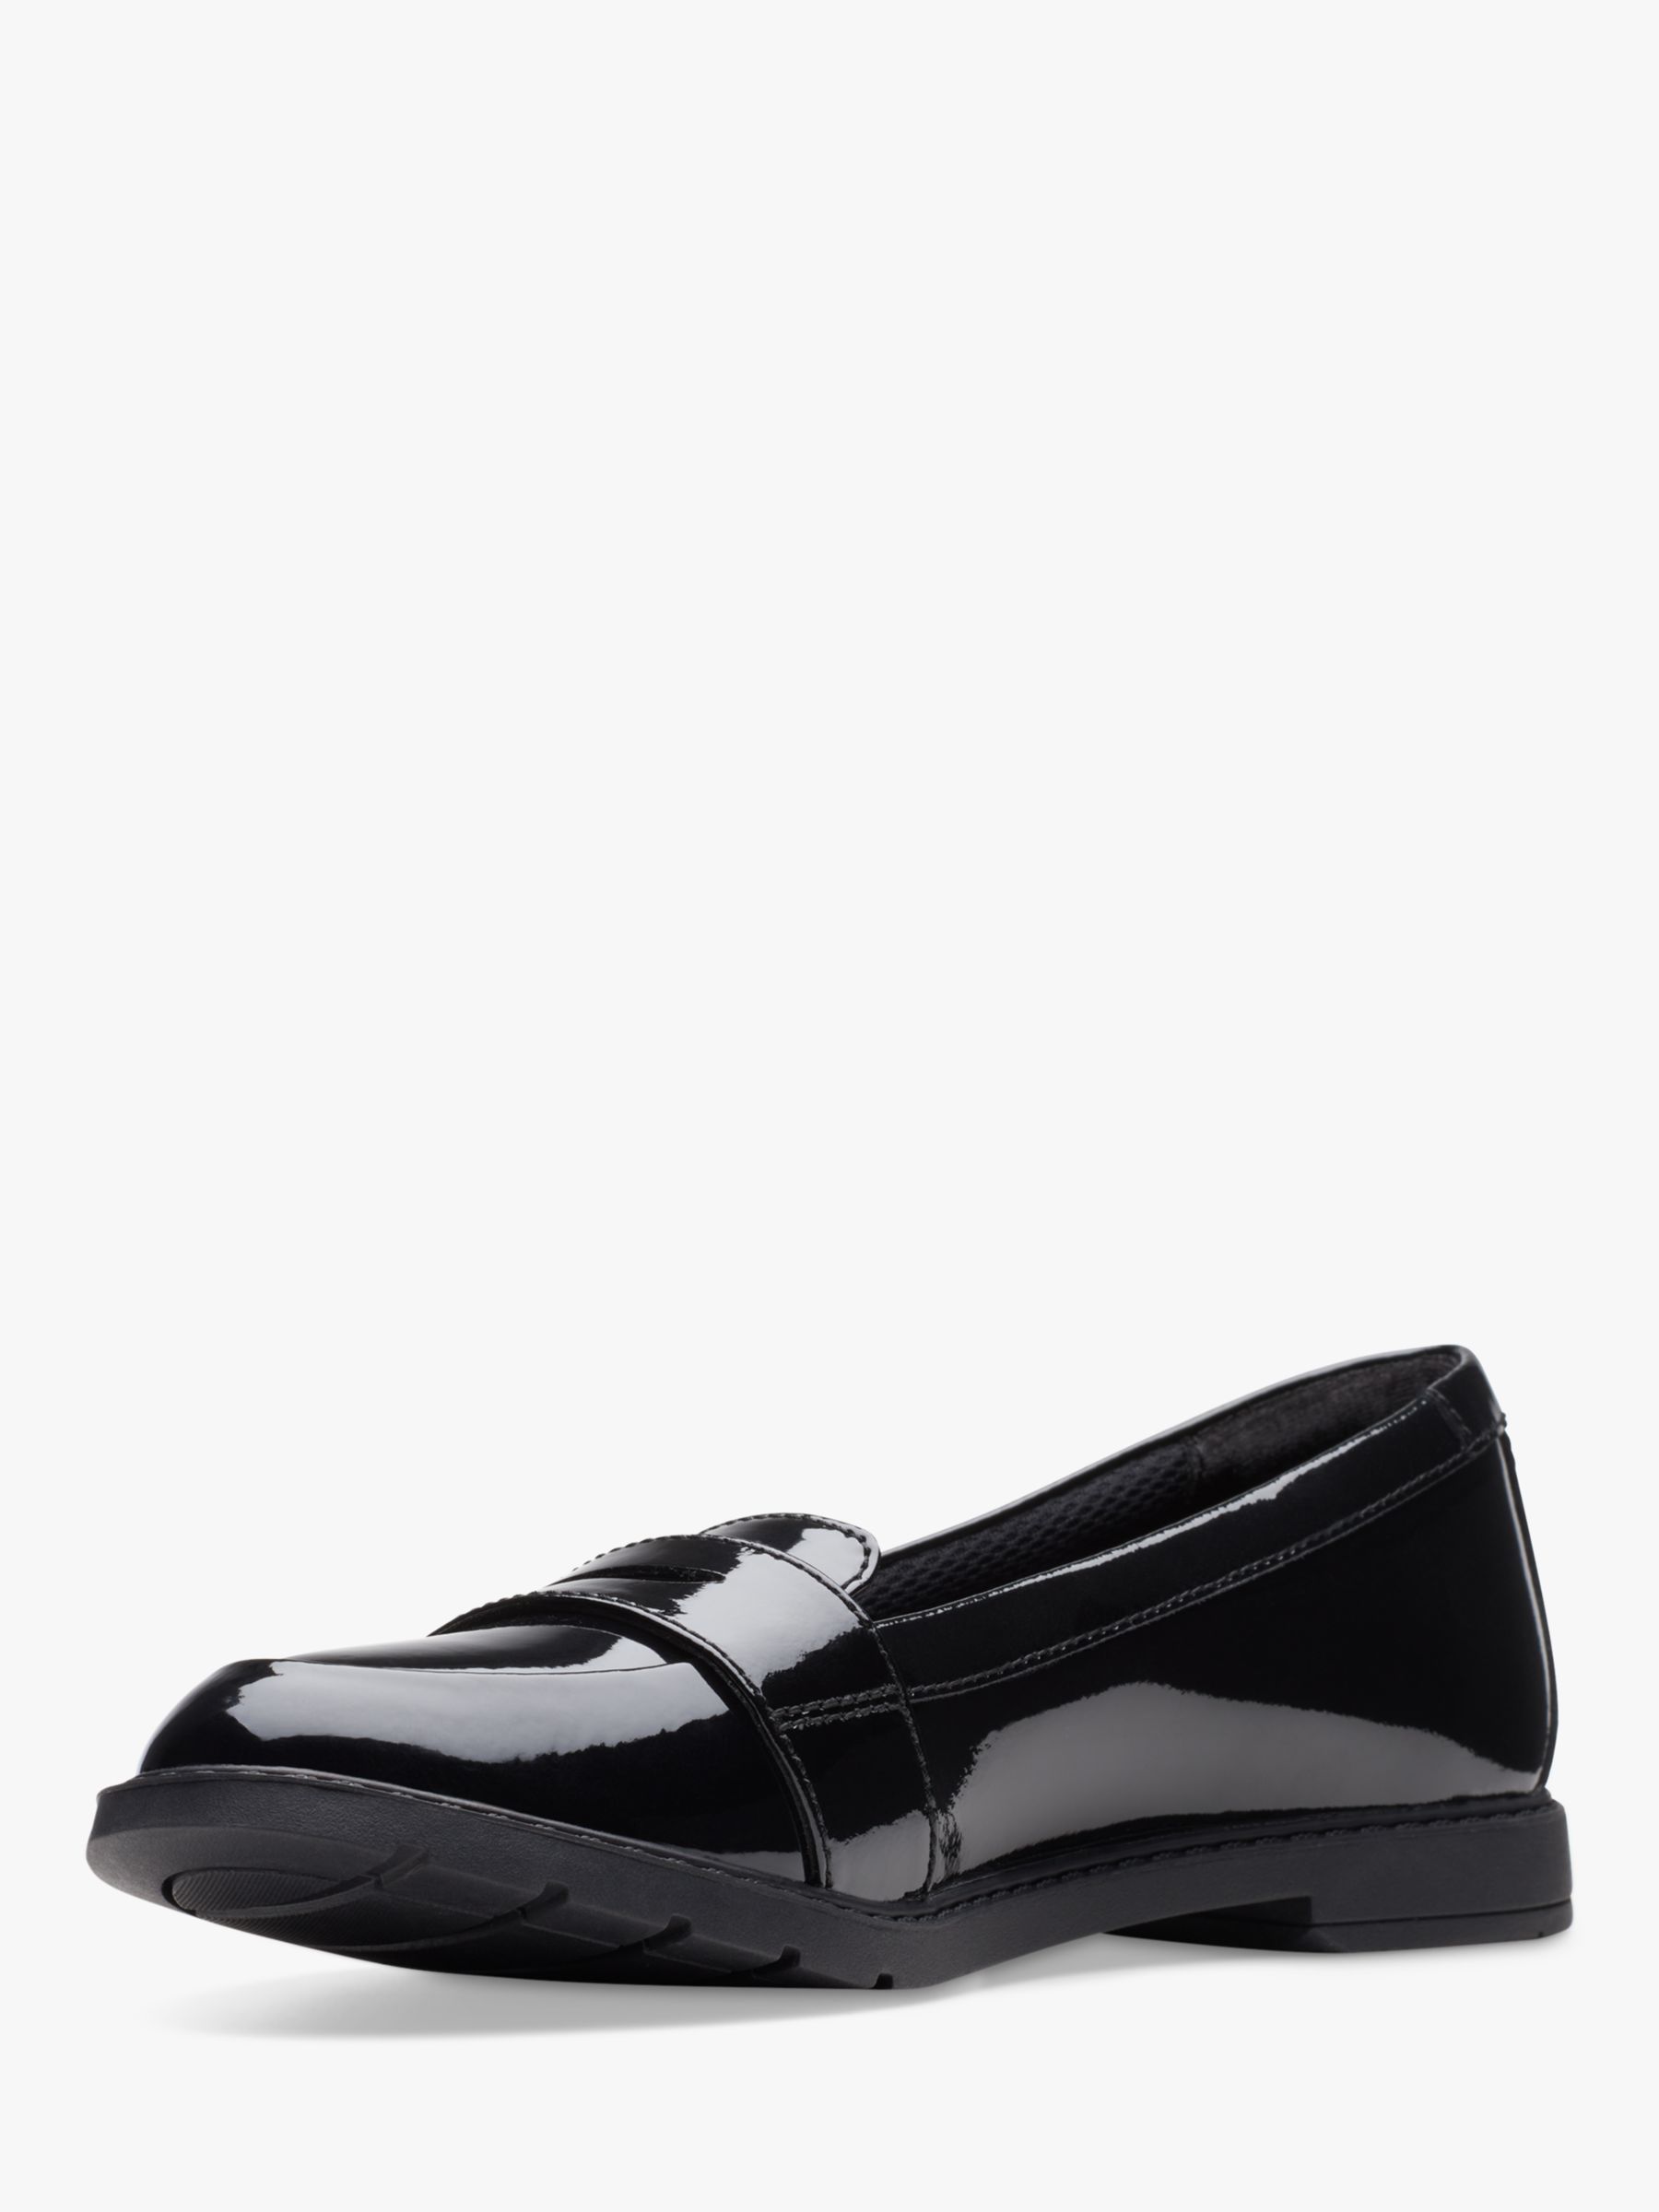 Clarks Kids' Scala Loafer School Shoes, Black Patent, 3F Jnr